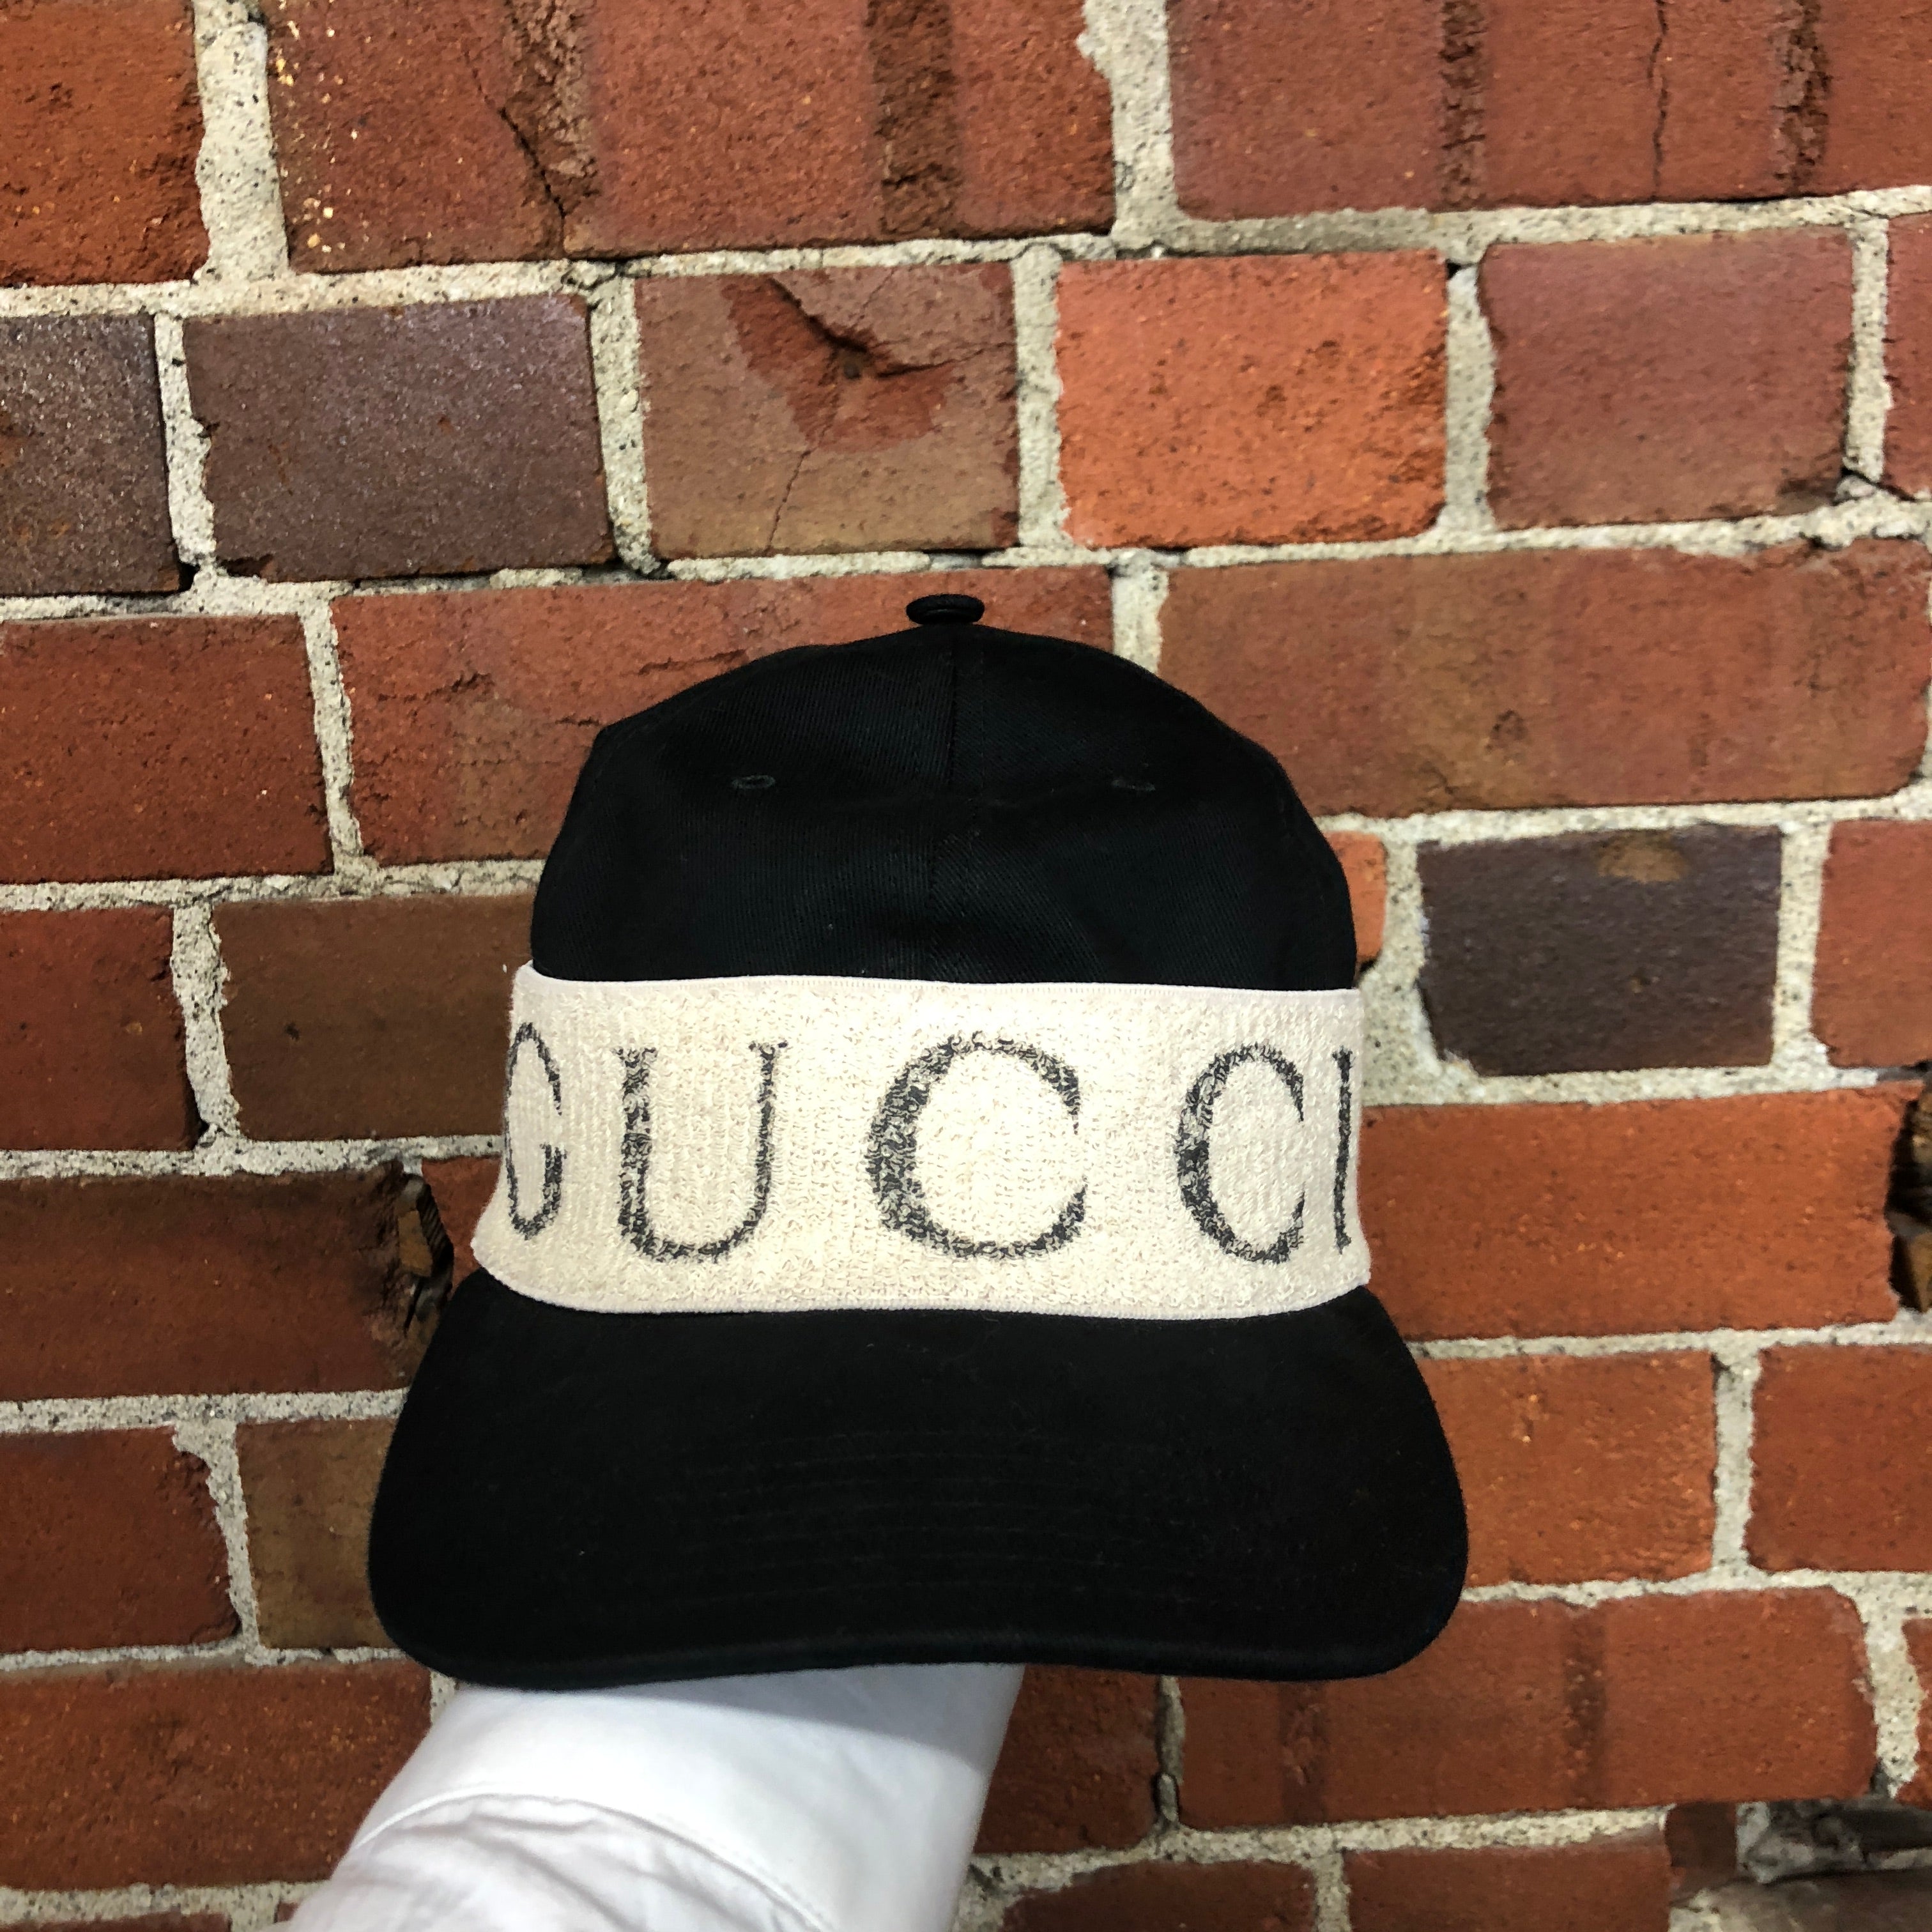 GUCCI Baseball hat with Gucci headband